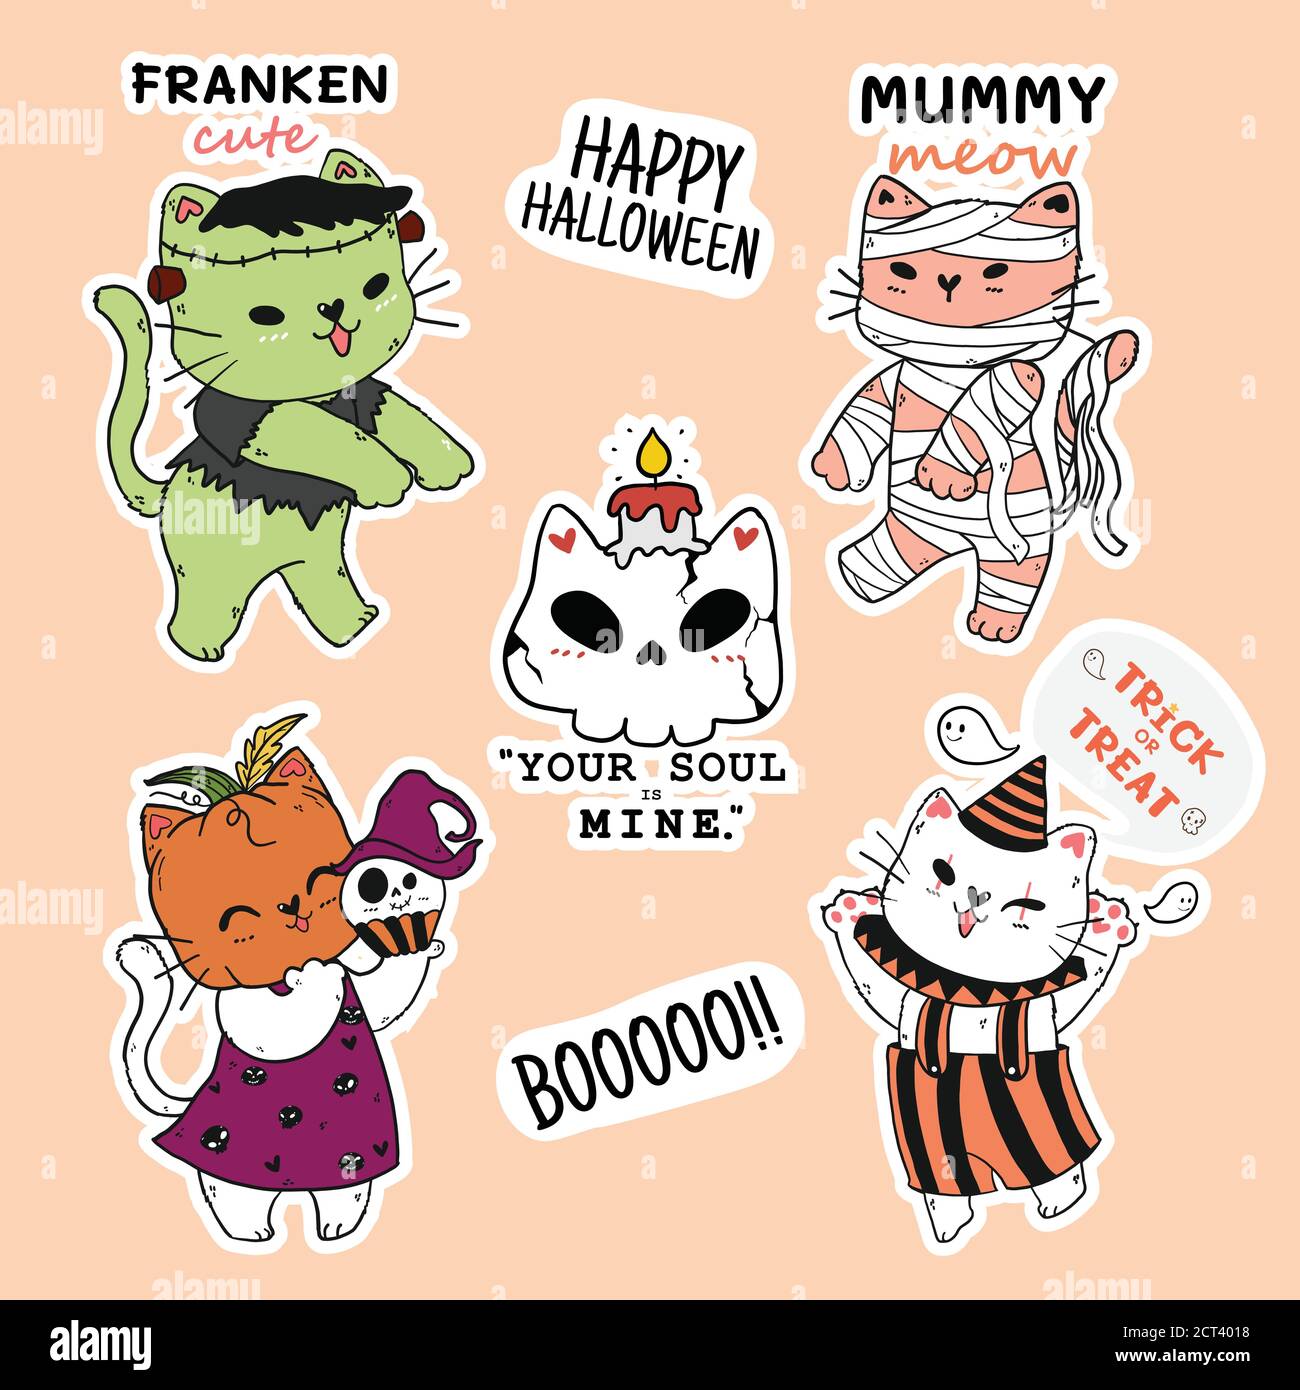 cute cat Halloween sticker collection, Frankenstein, pumpkin head, mummy, doodle outline, idea for sticker, sublimation, journal, planner, printable Stock Vector